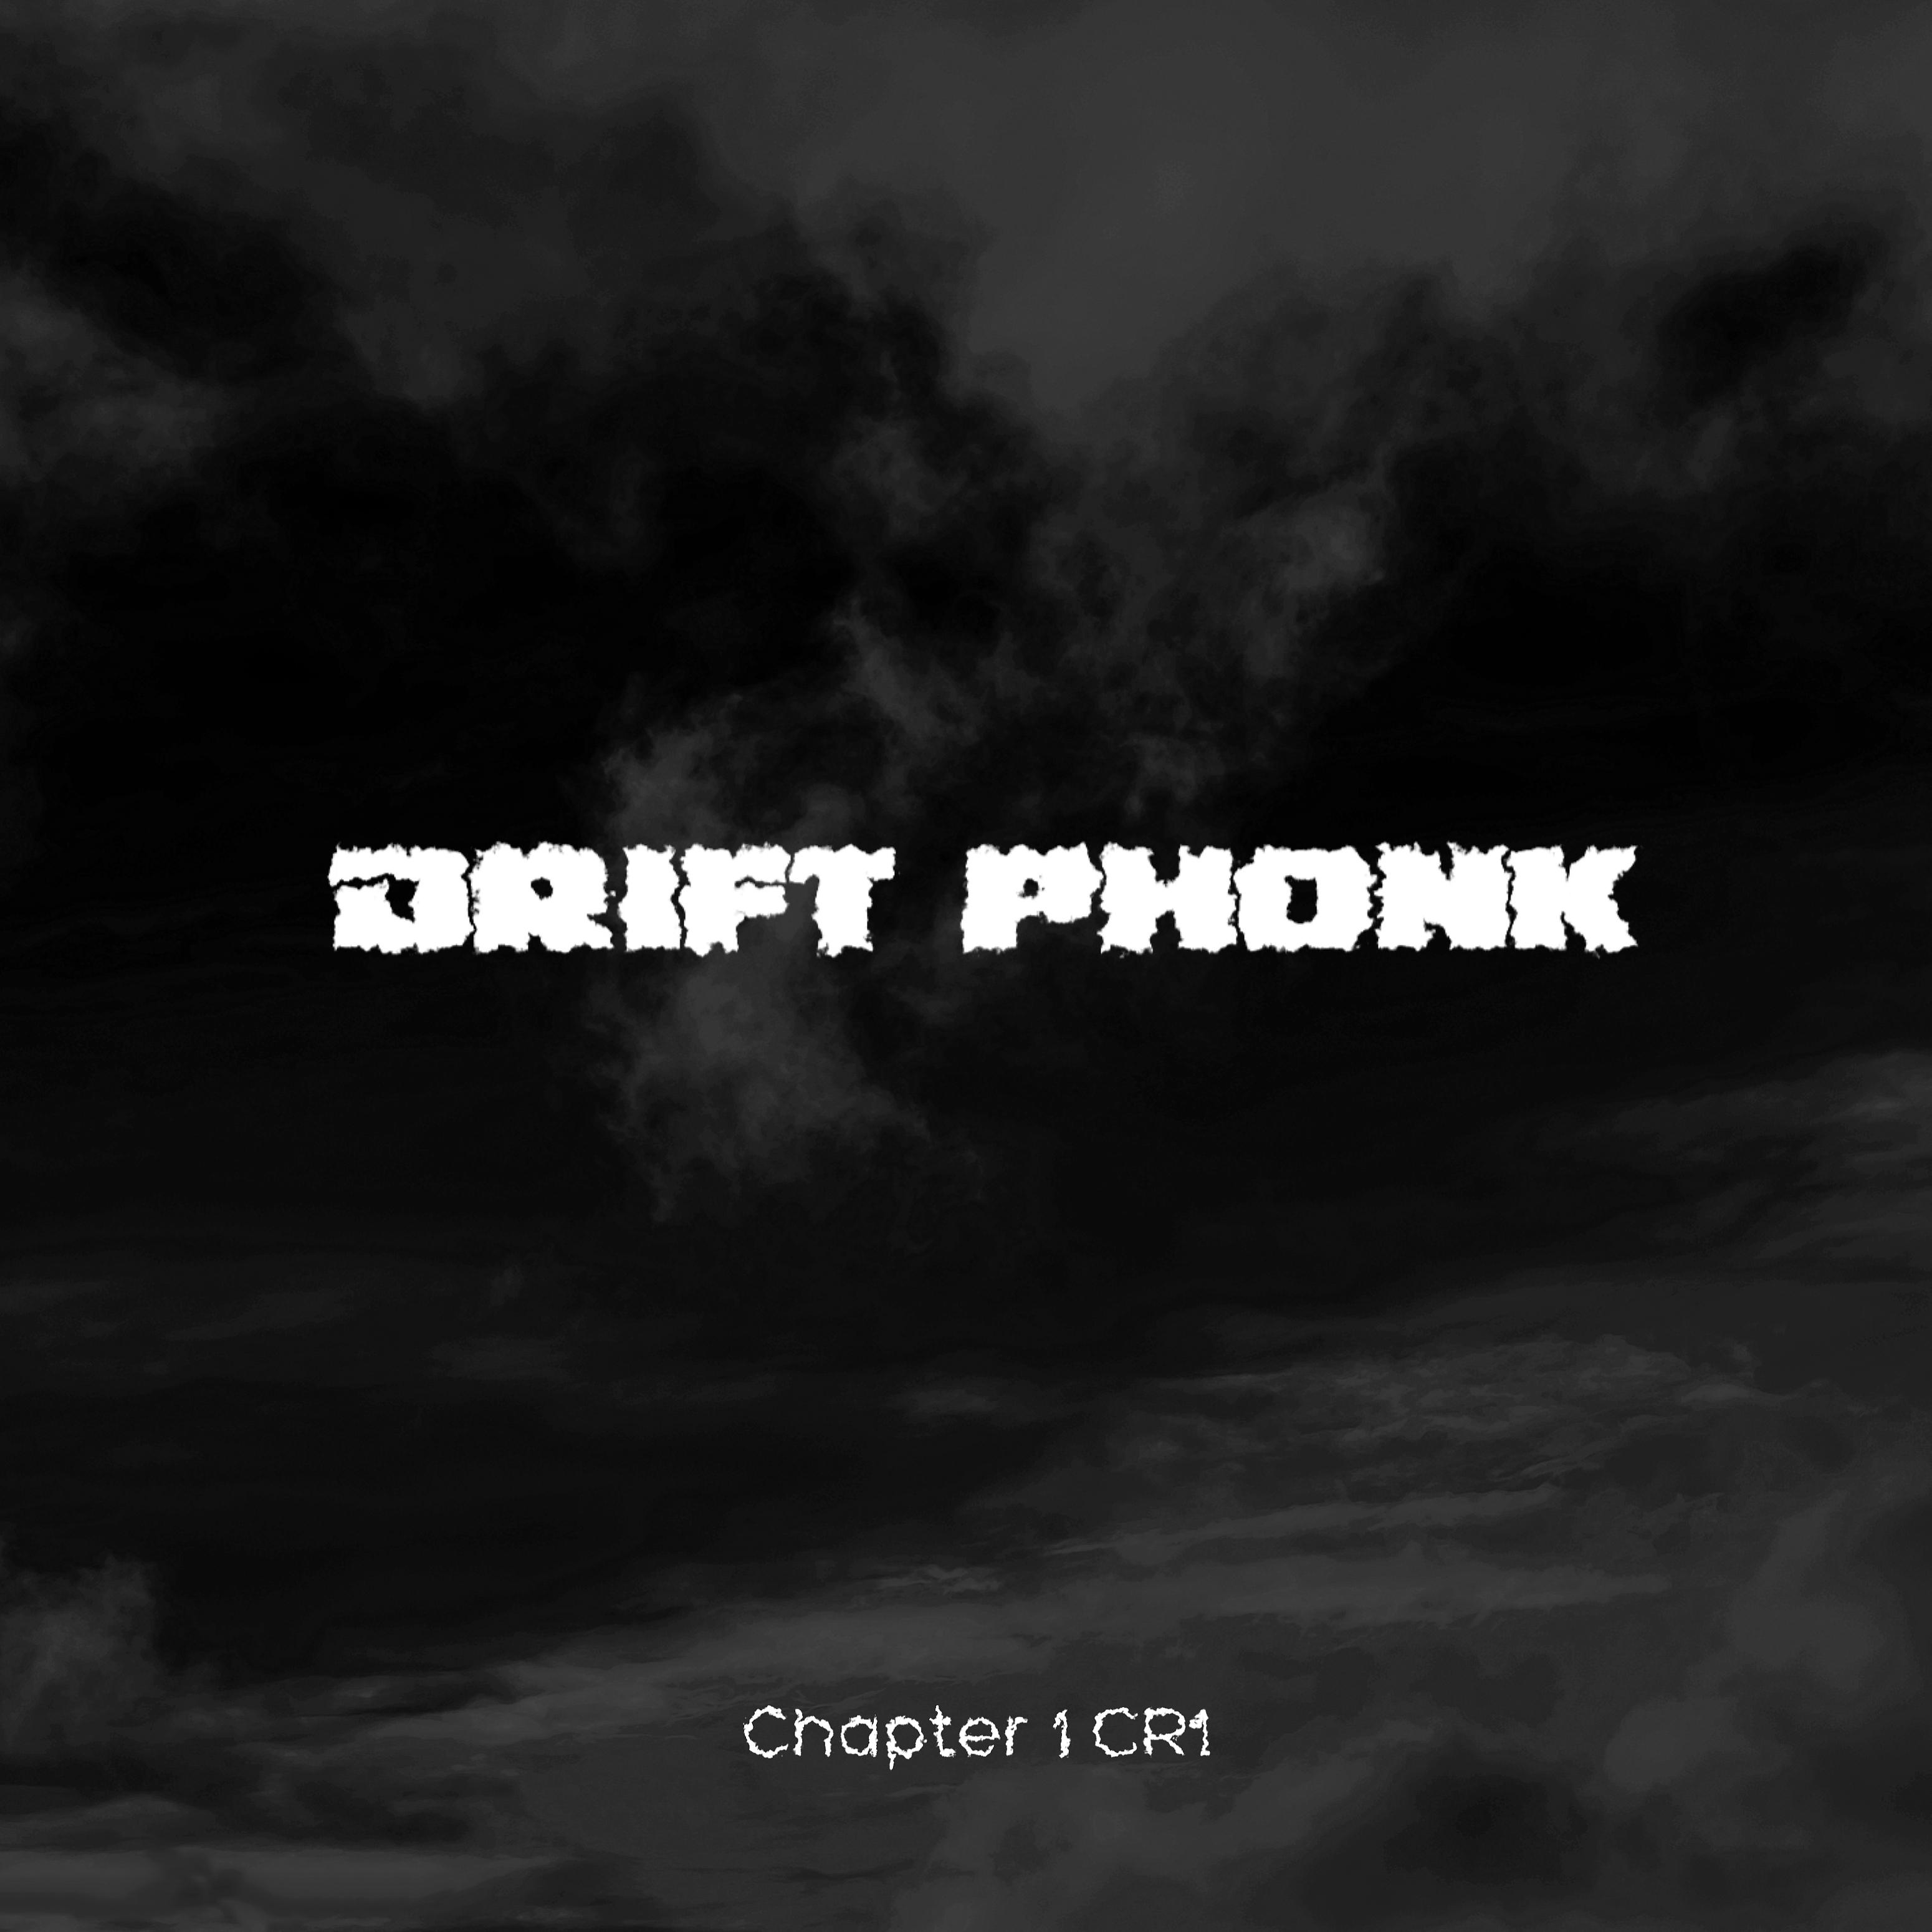 Постер альбома Drift Phonk